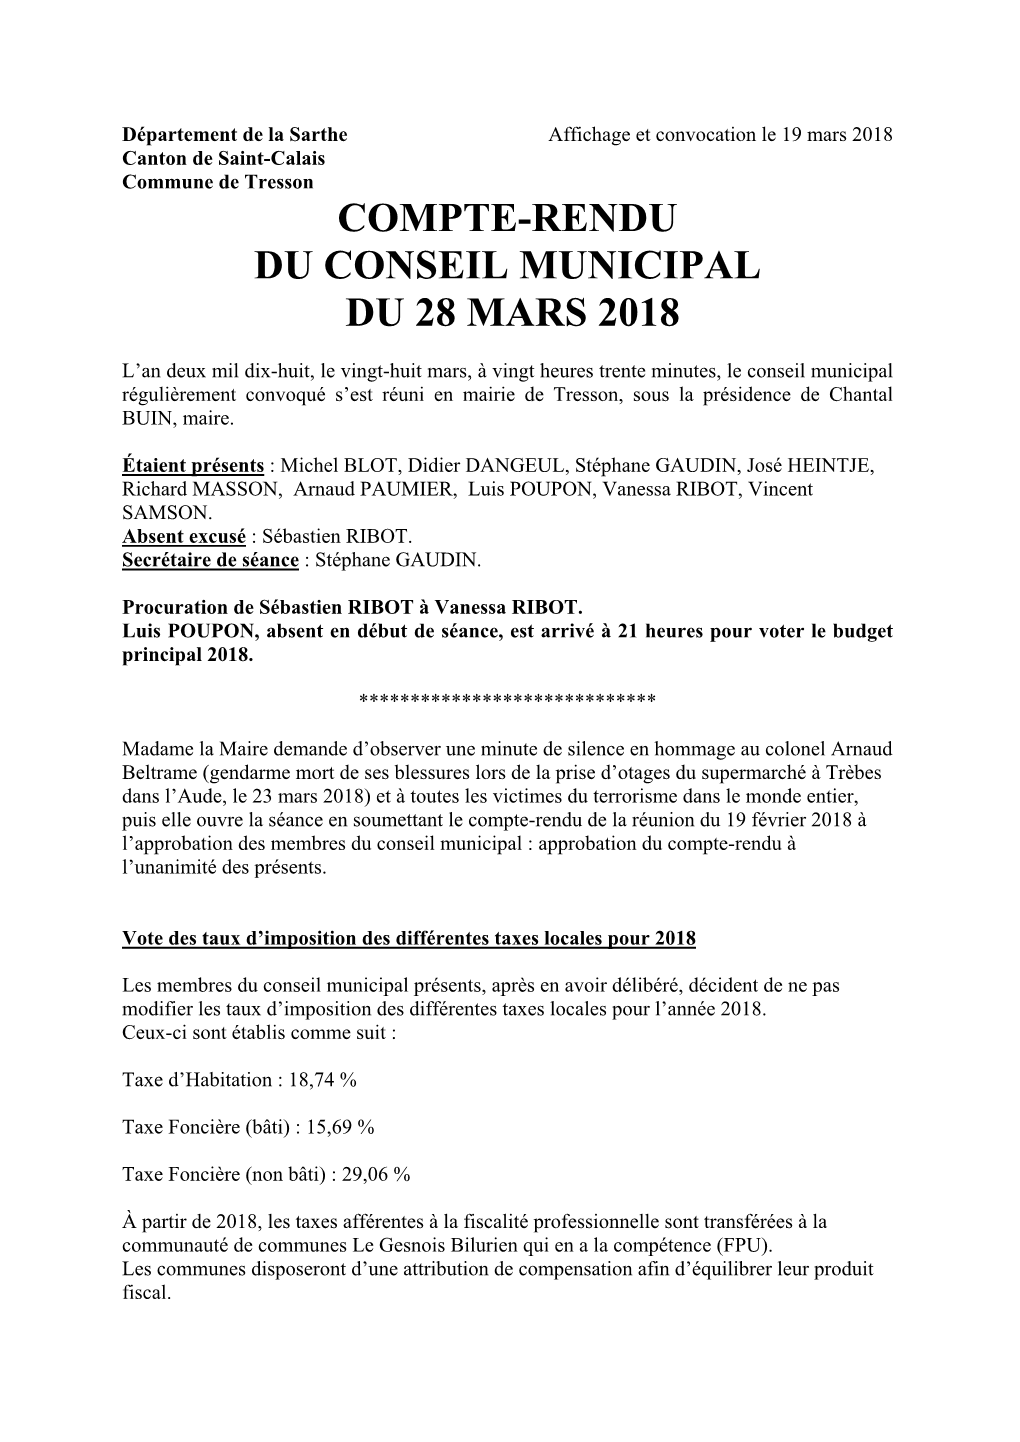 Compte-Rendu Du Conseil Municipal Du 28 Mars 2018